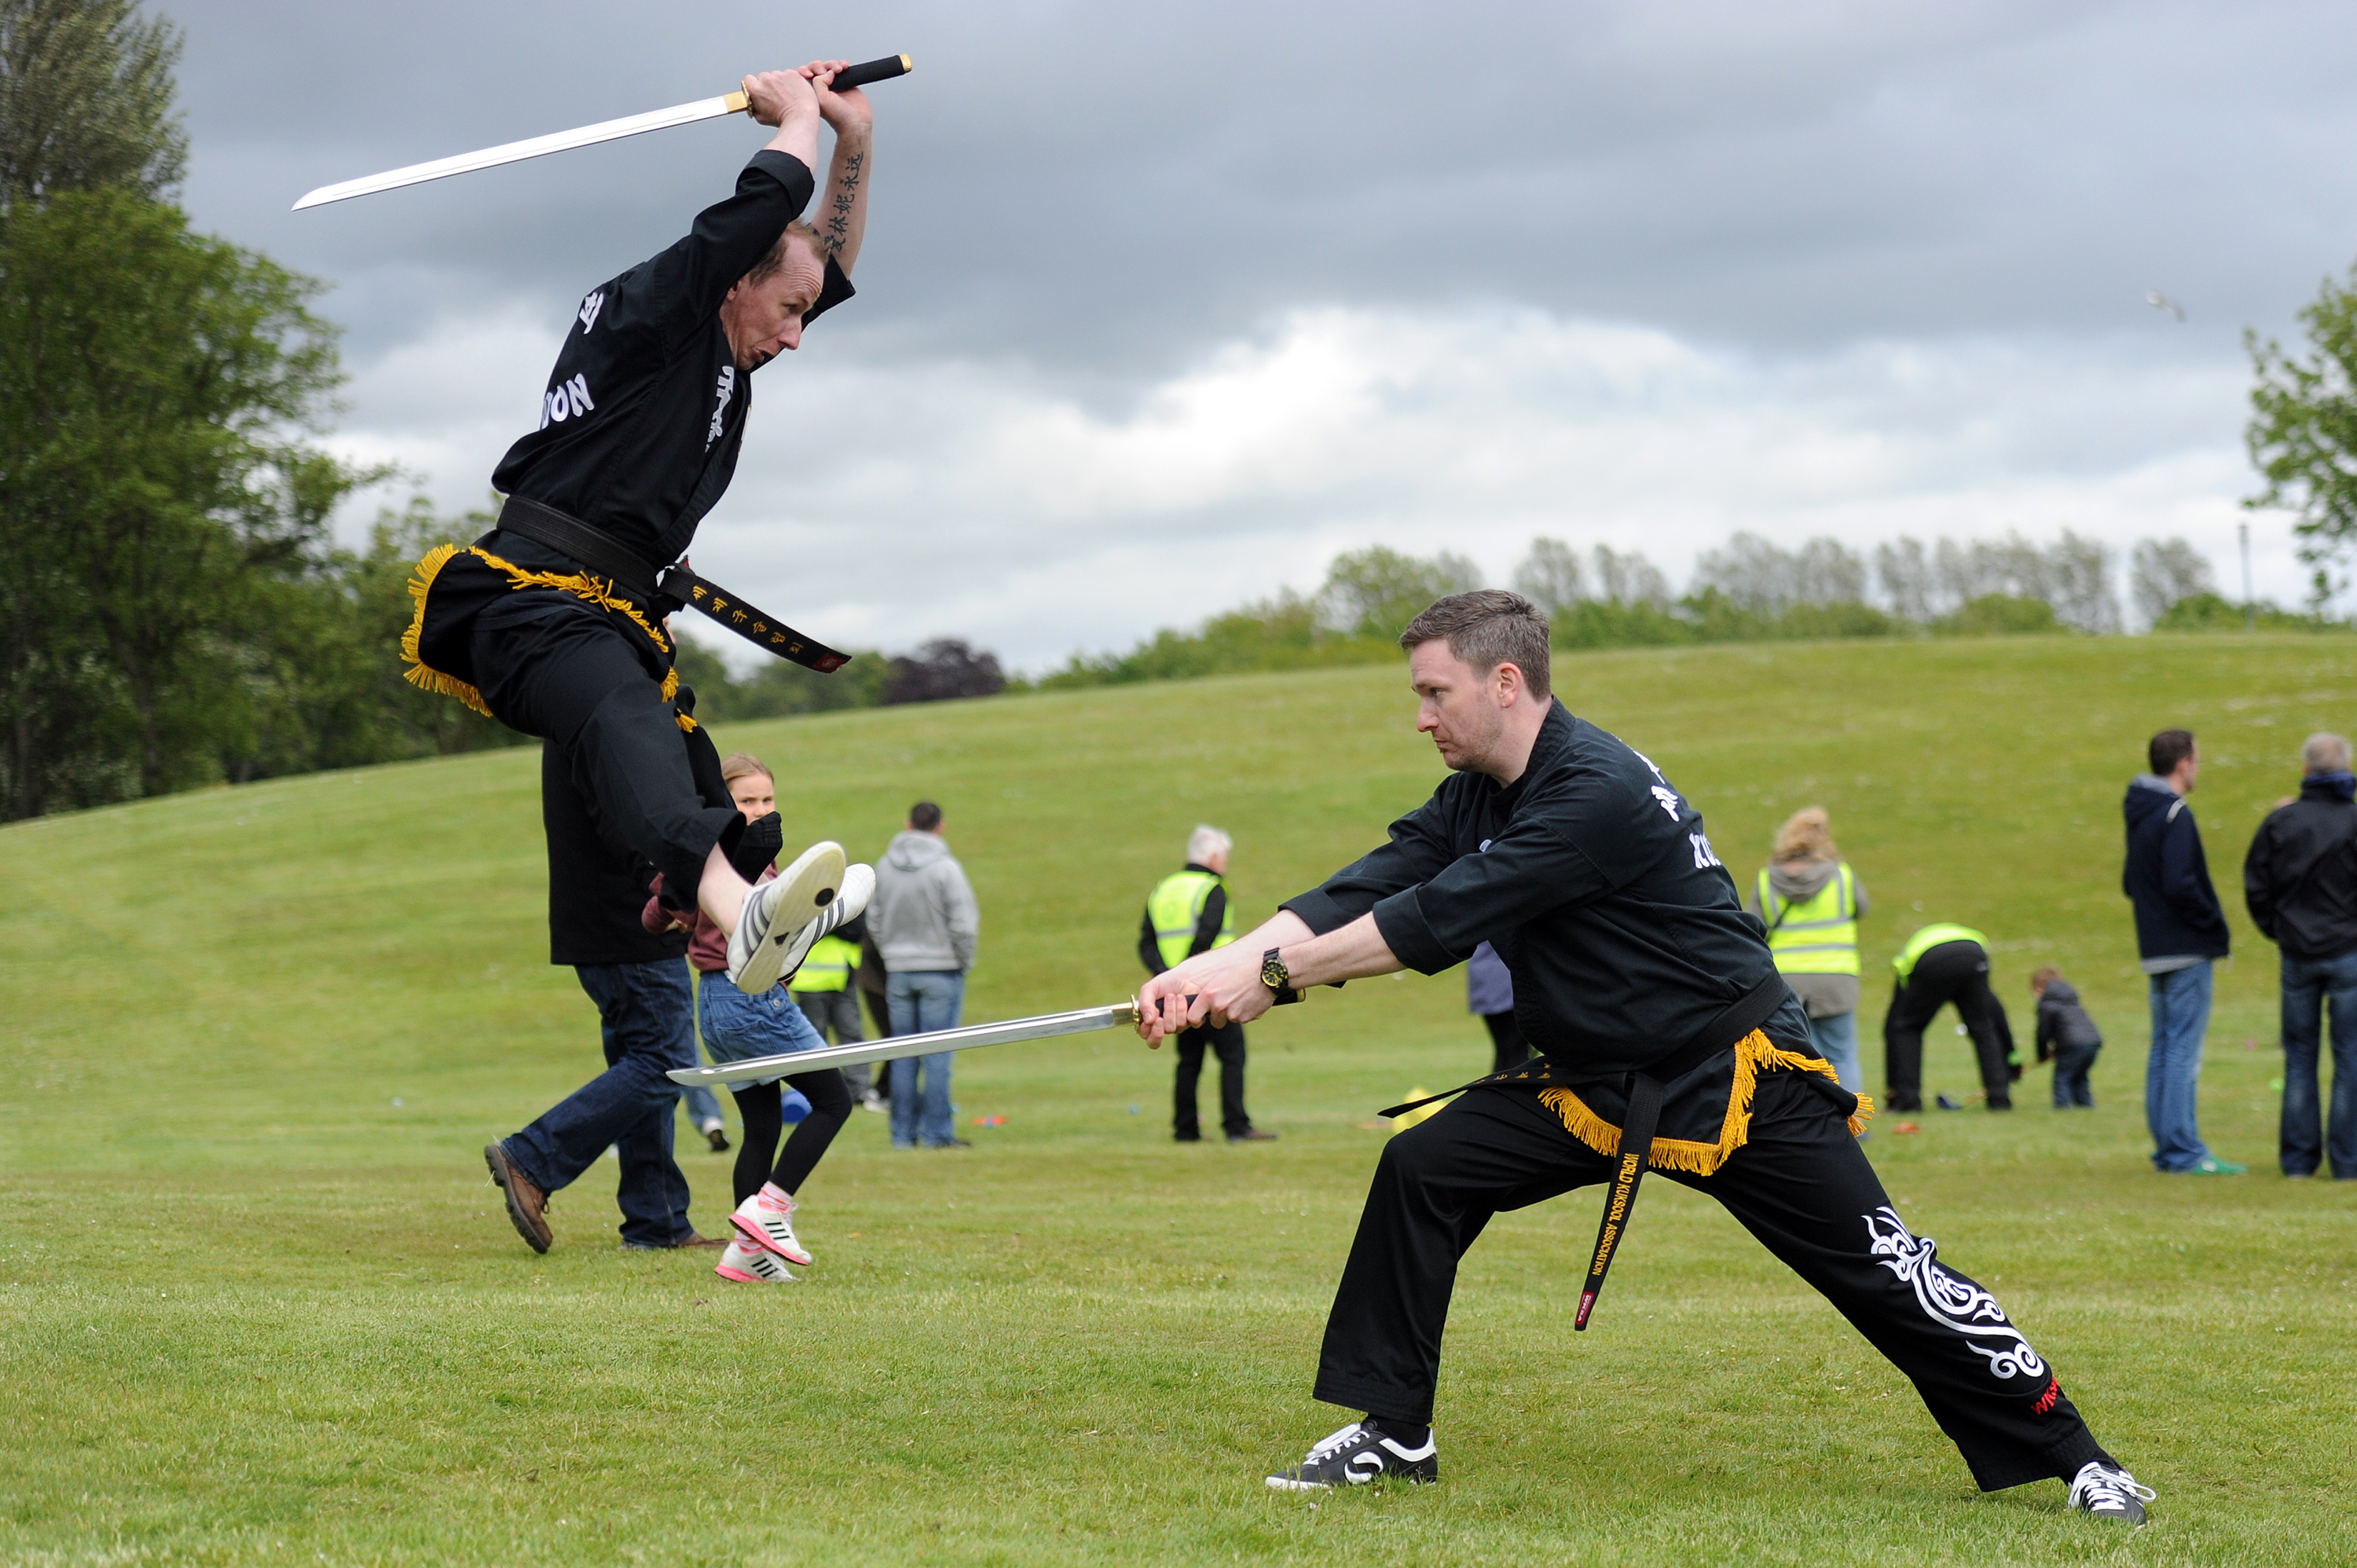 Patrick McKernan and Bruce Munro from the Kuk Sool Won martial arts club at last year's festival